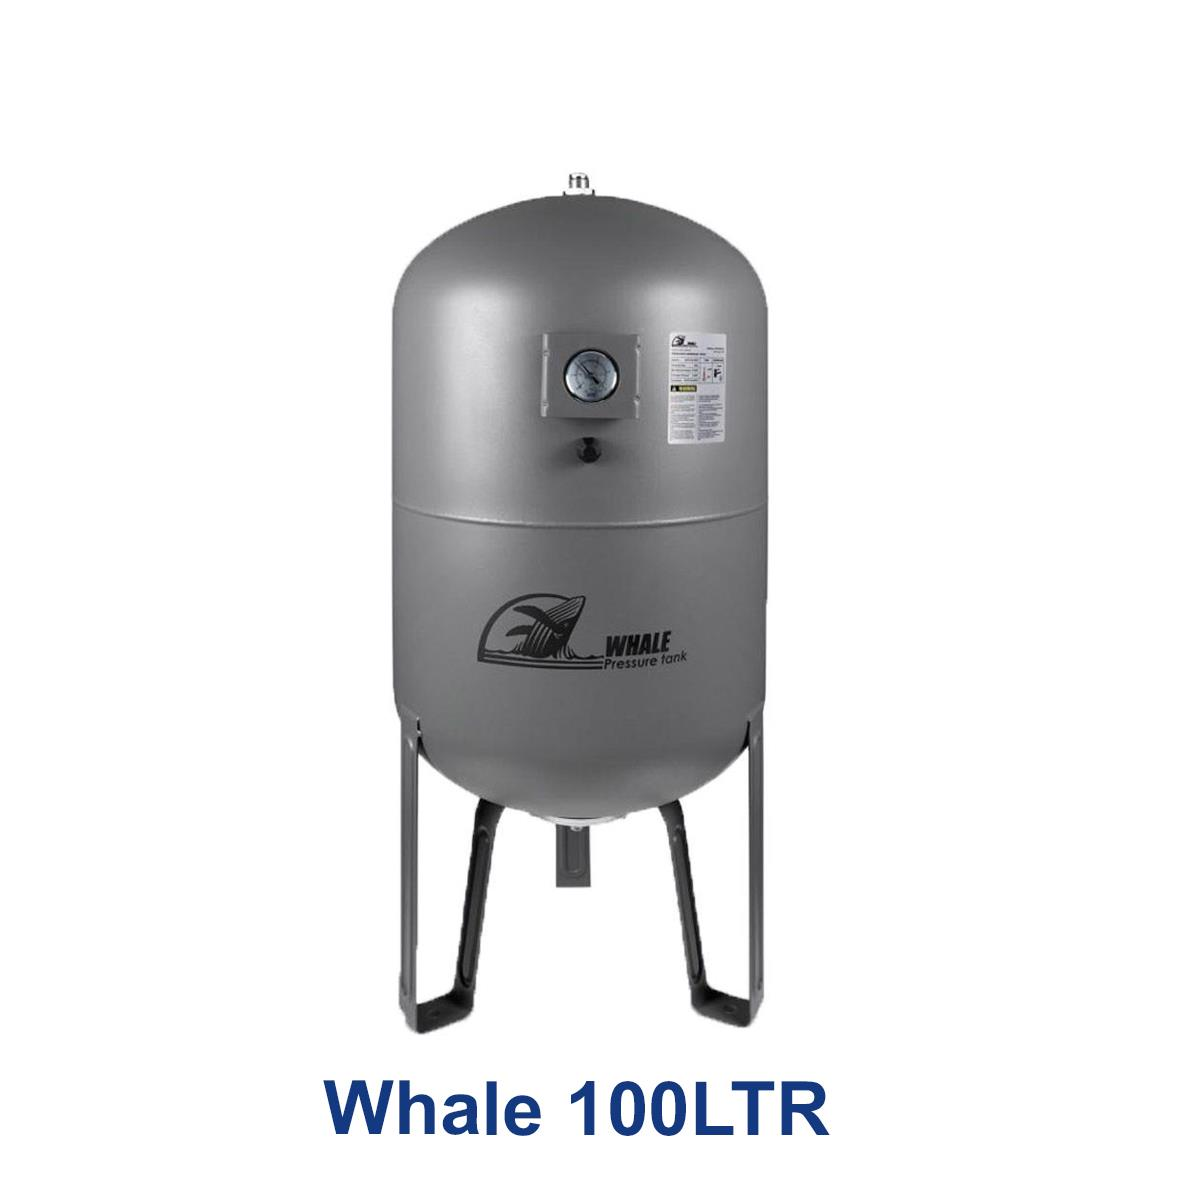 Whale-100LTR